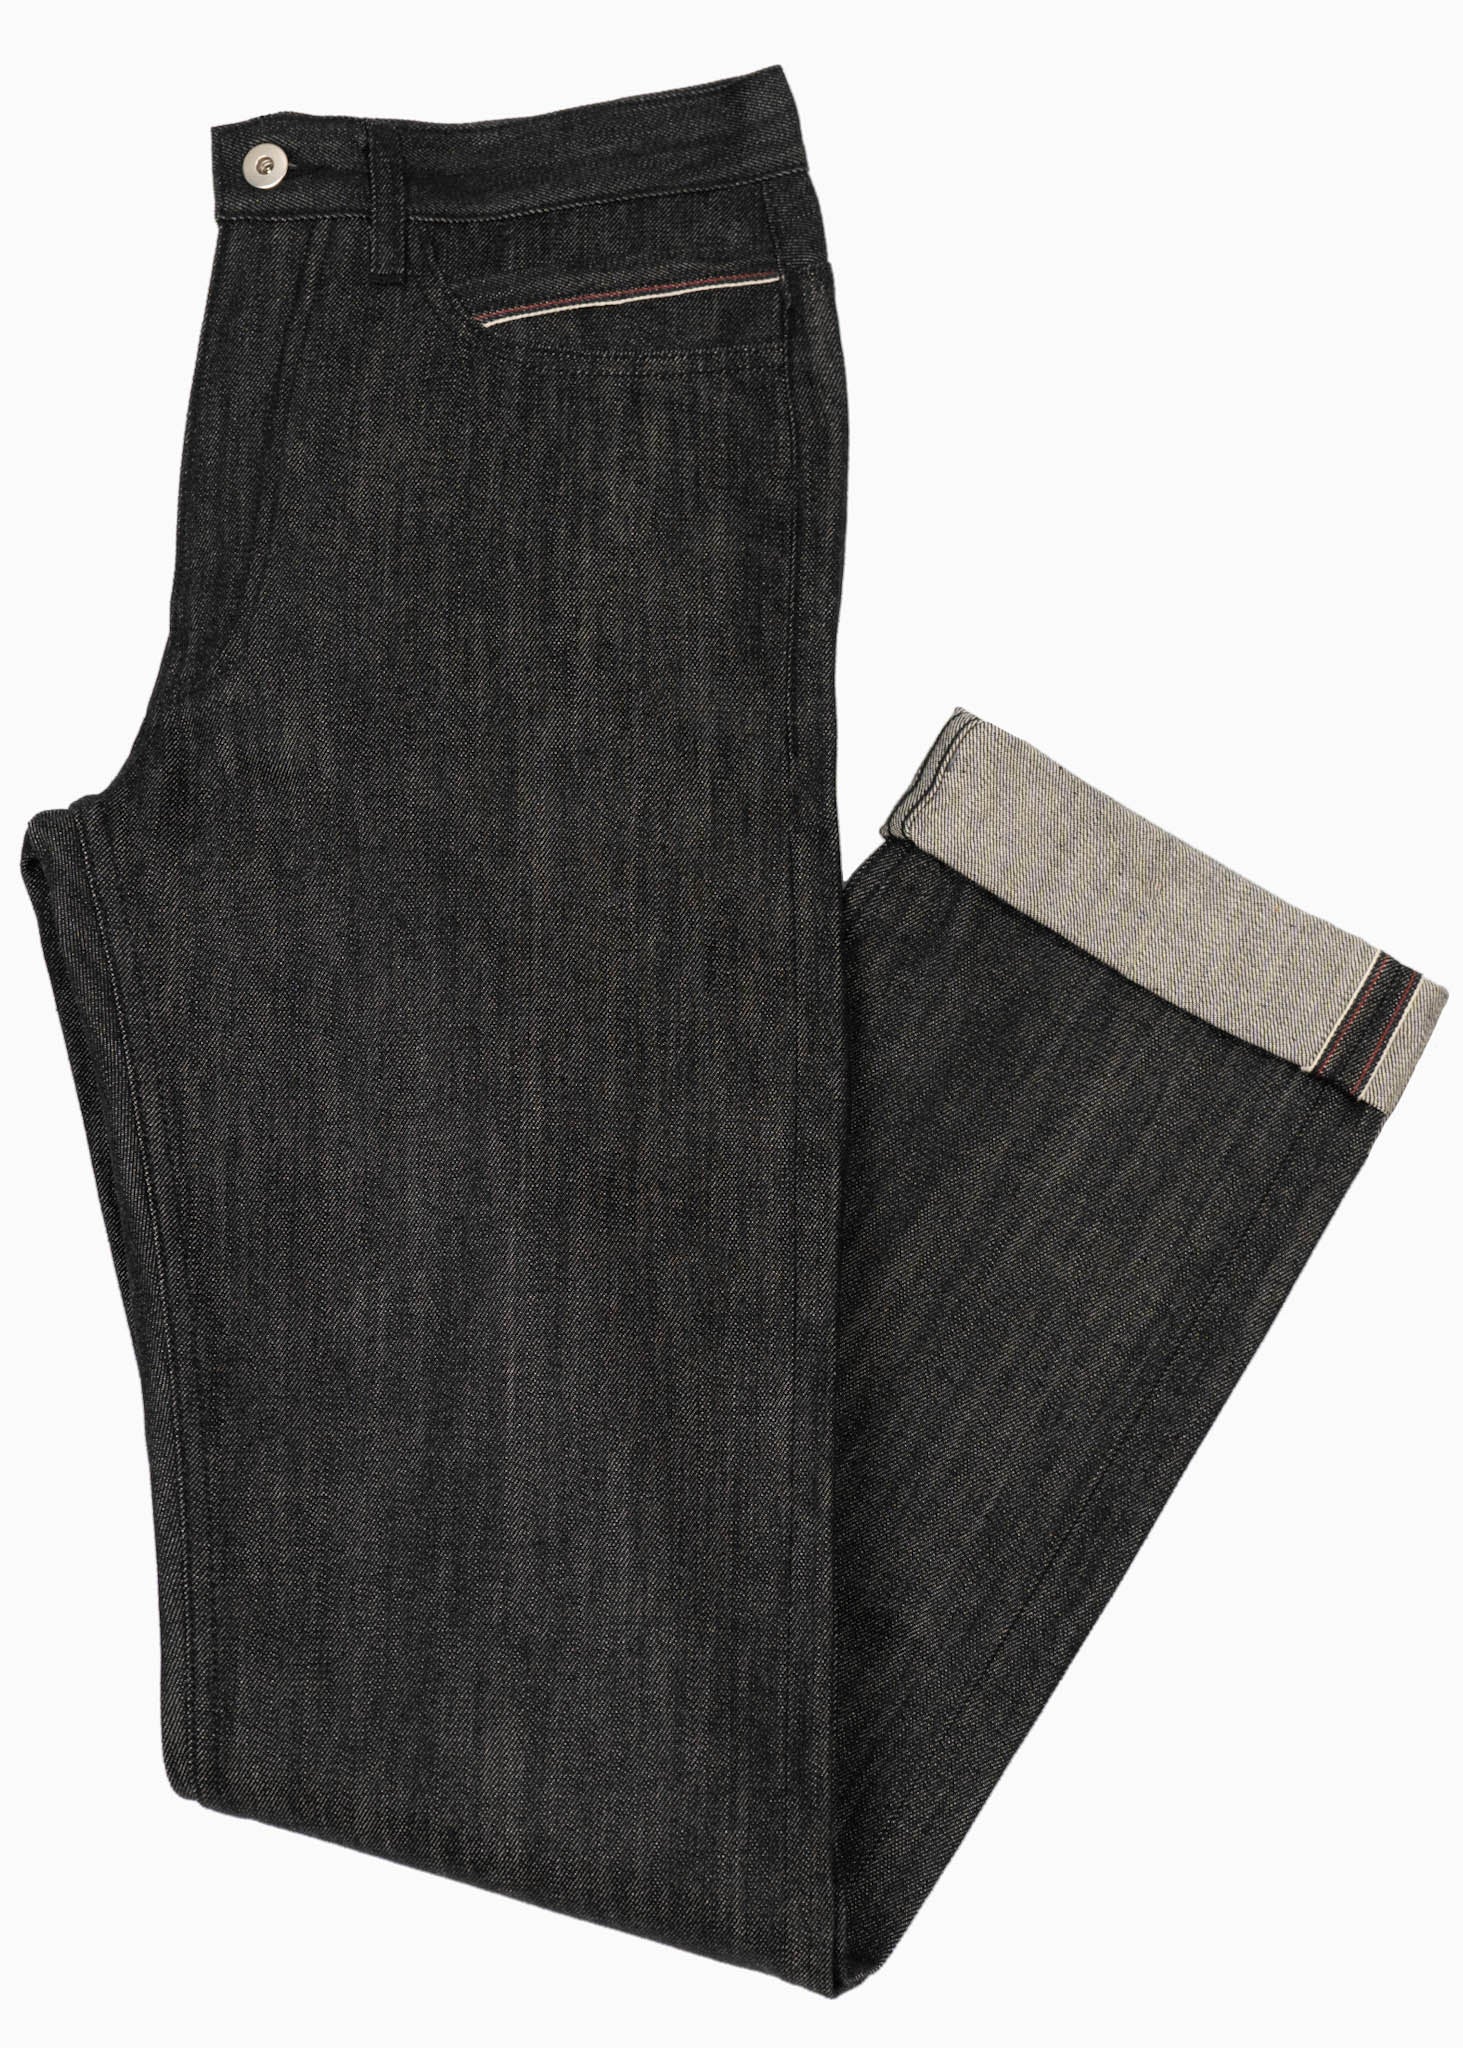 Relaxed Fit - Black Selvedge Italian Denim Heritage Jeans